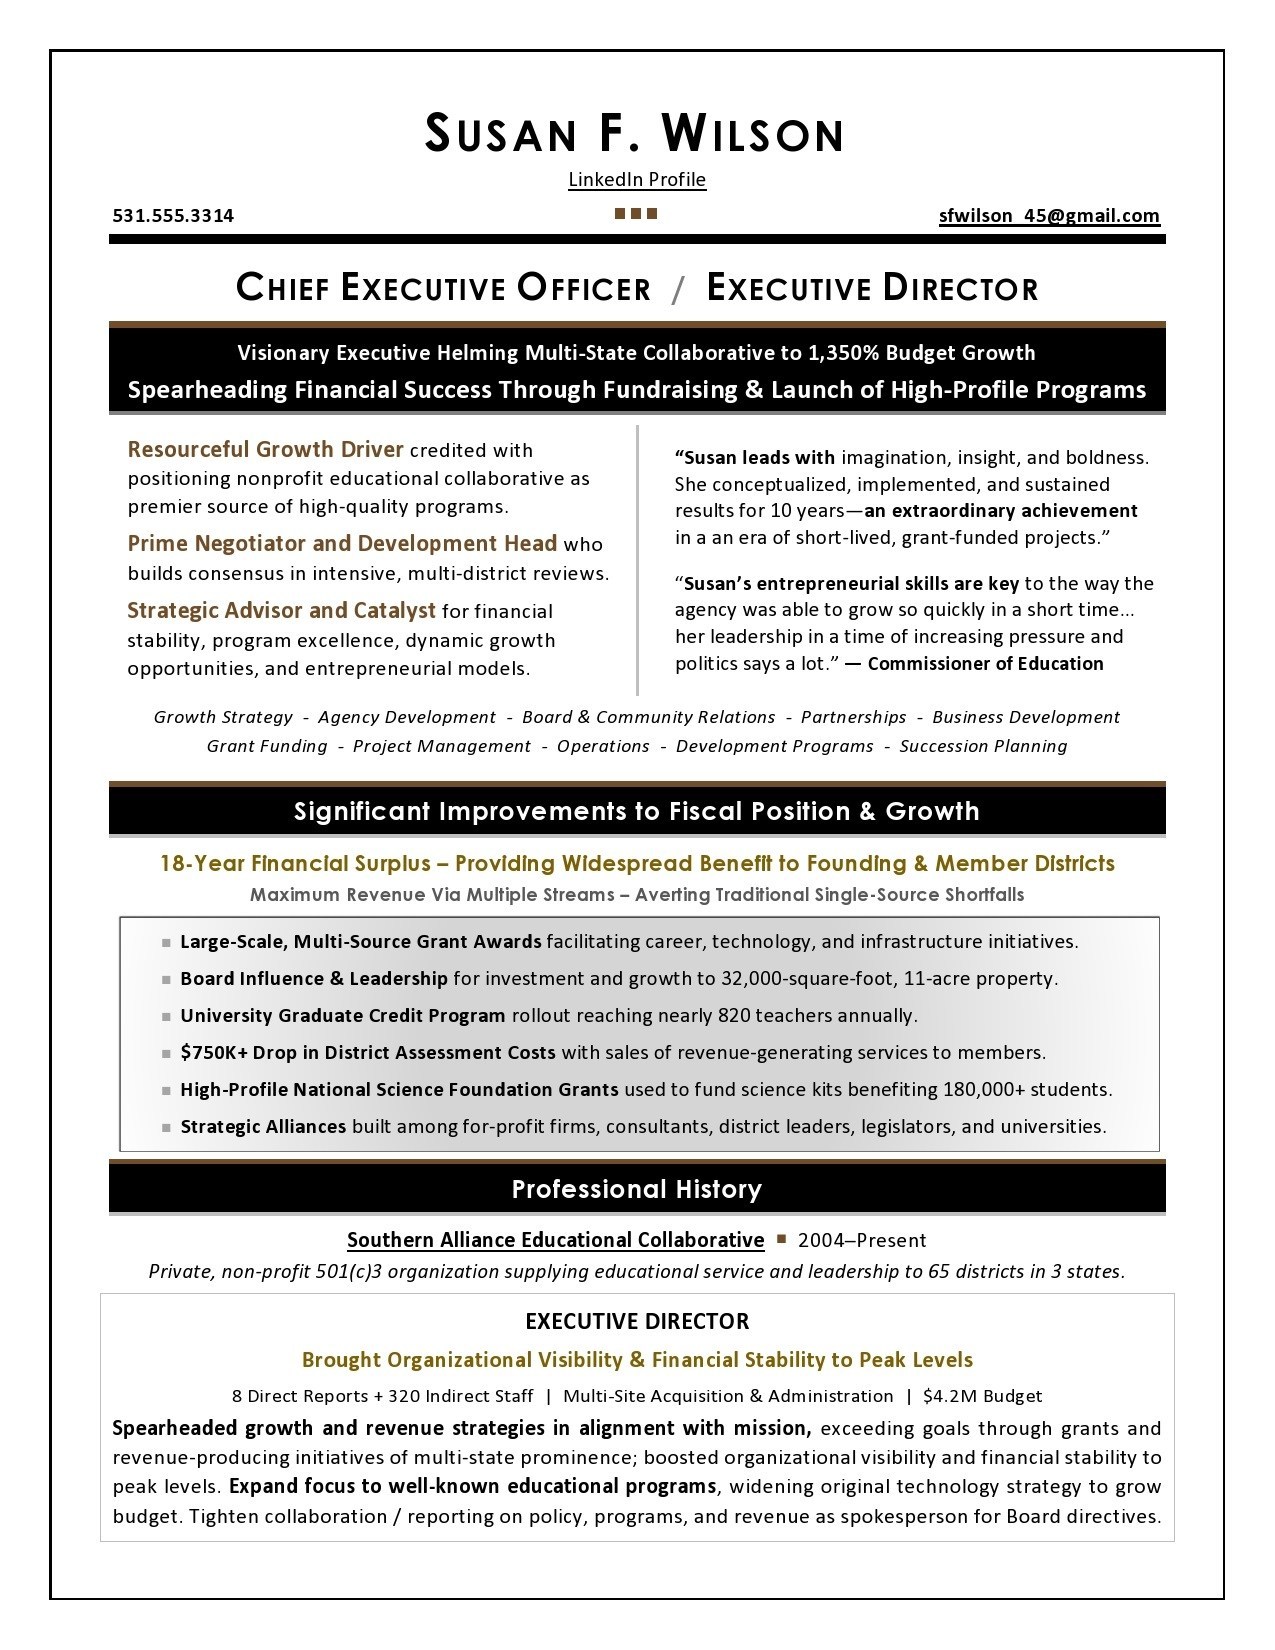 Professional Resume Writers Nonprofit Executive Resume Sample 3 professional resume writers|wikiresume.com